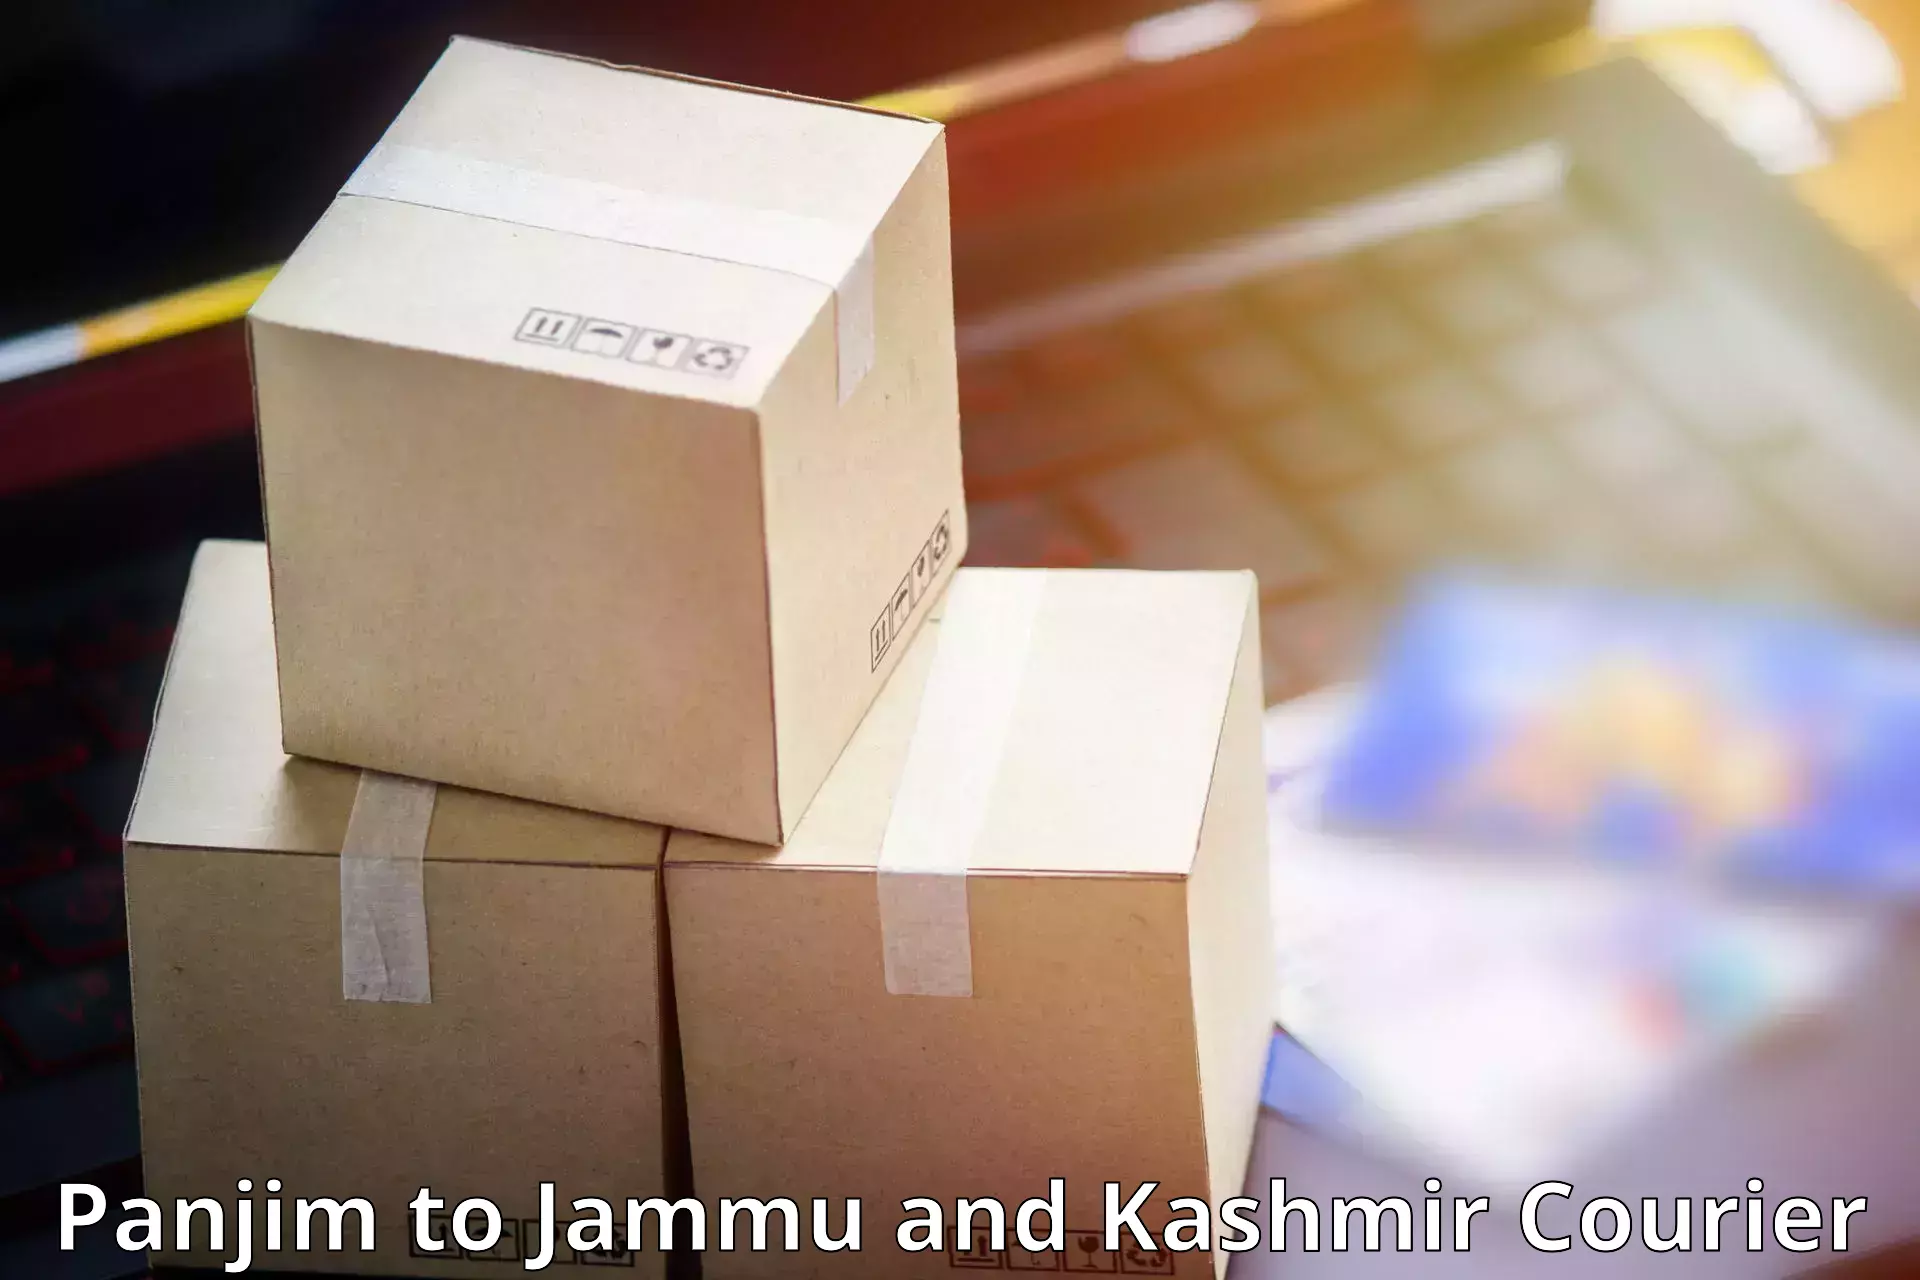 Reliable delivery network Panjim to Kishtwar